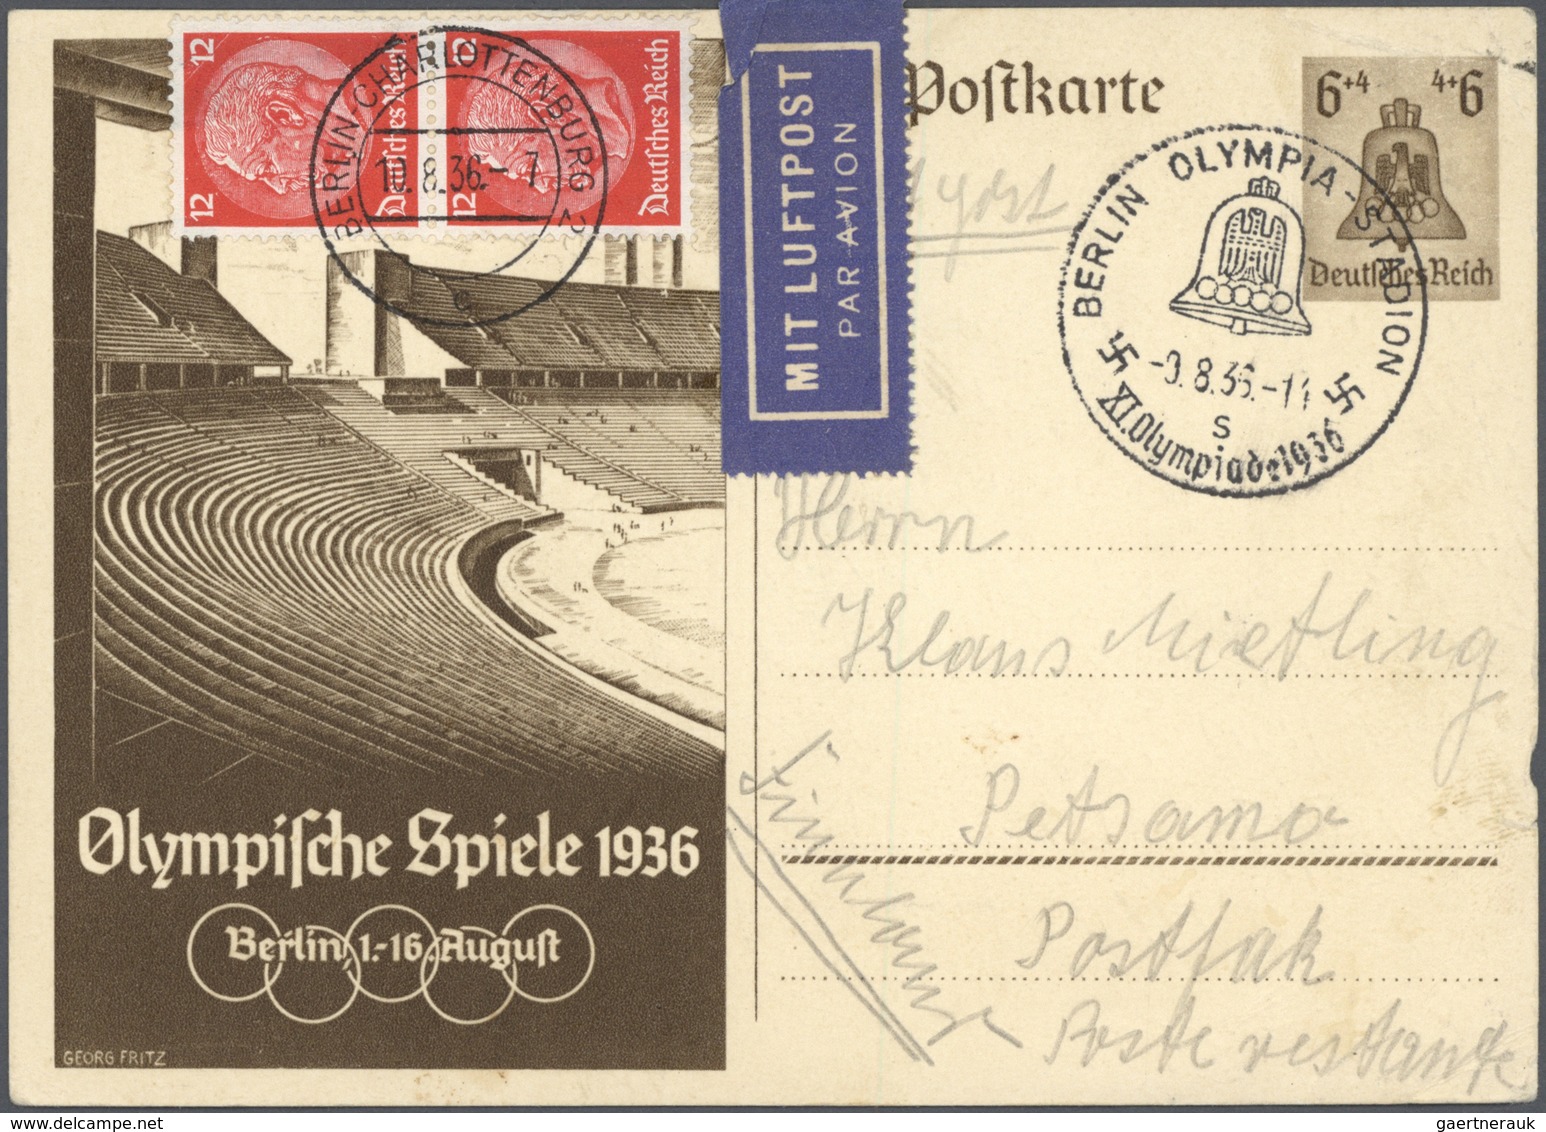 Thematik: Olympische Spiele / olympic games: 1936, Olympia Ganzsachenkarton 6 Pfg. bzw. 15 Pfg. aus